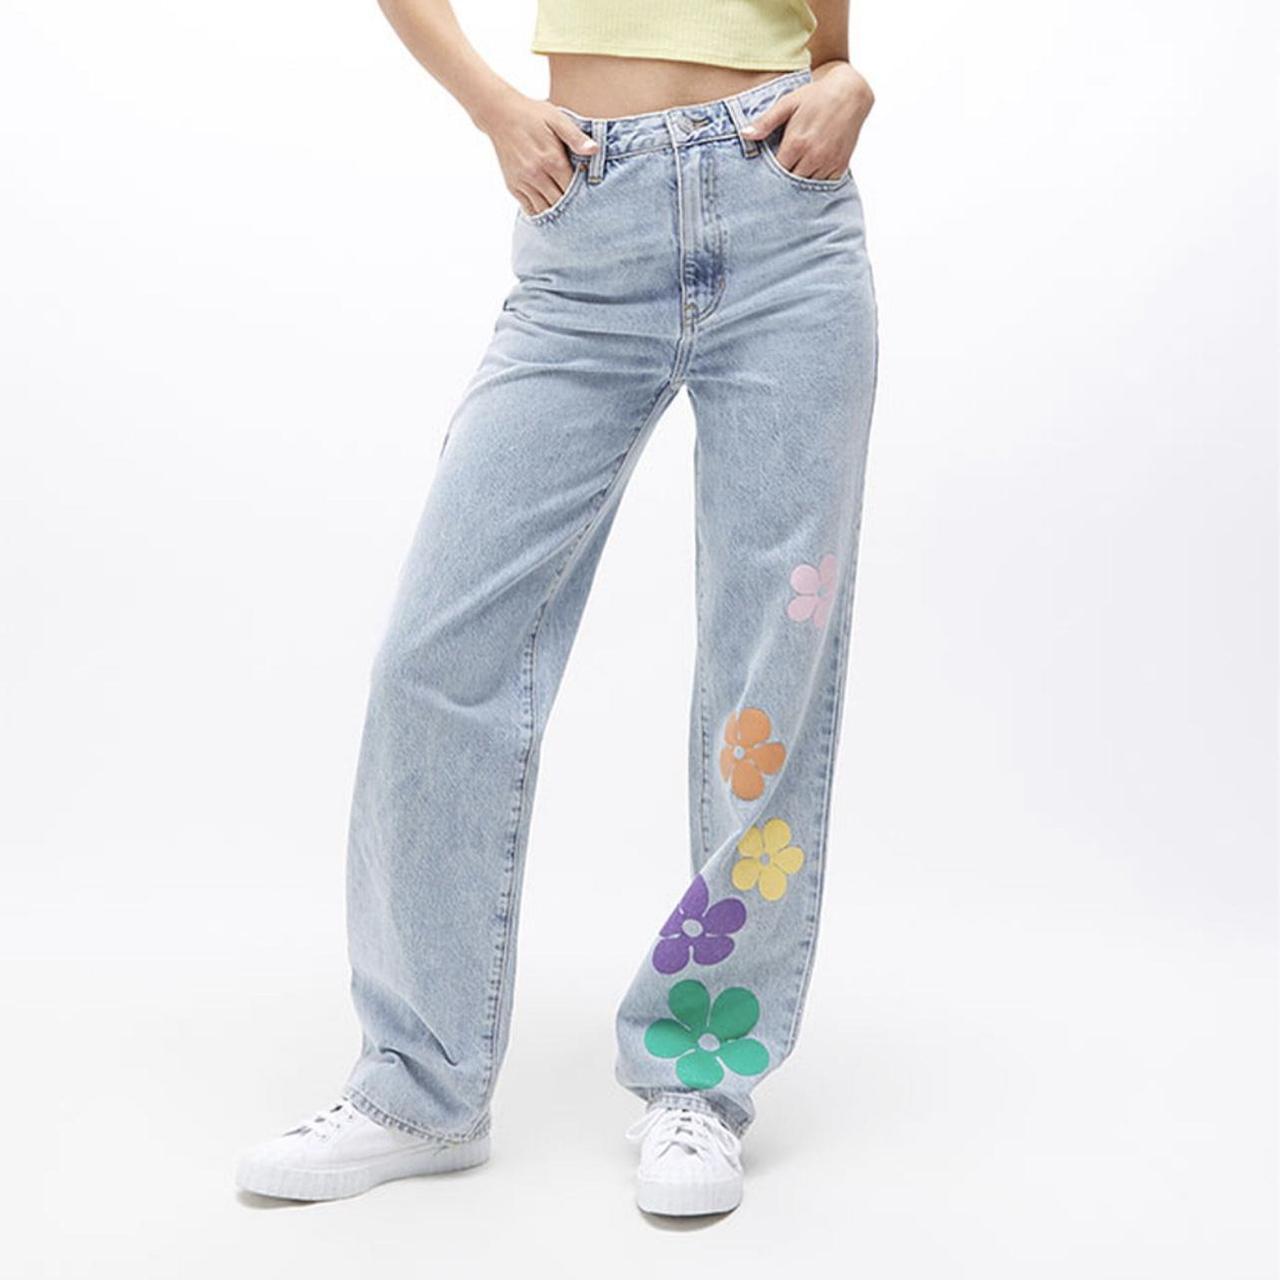 Brand new 90's boyfriend's jeans from Pacsun! - Depop